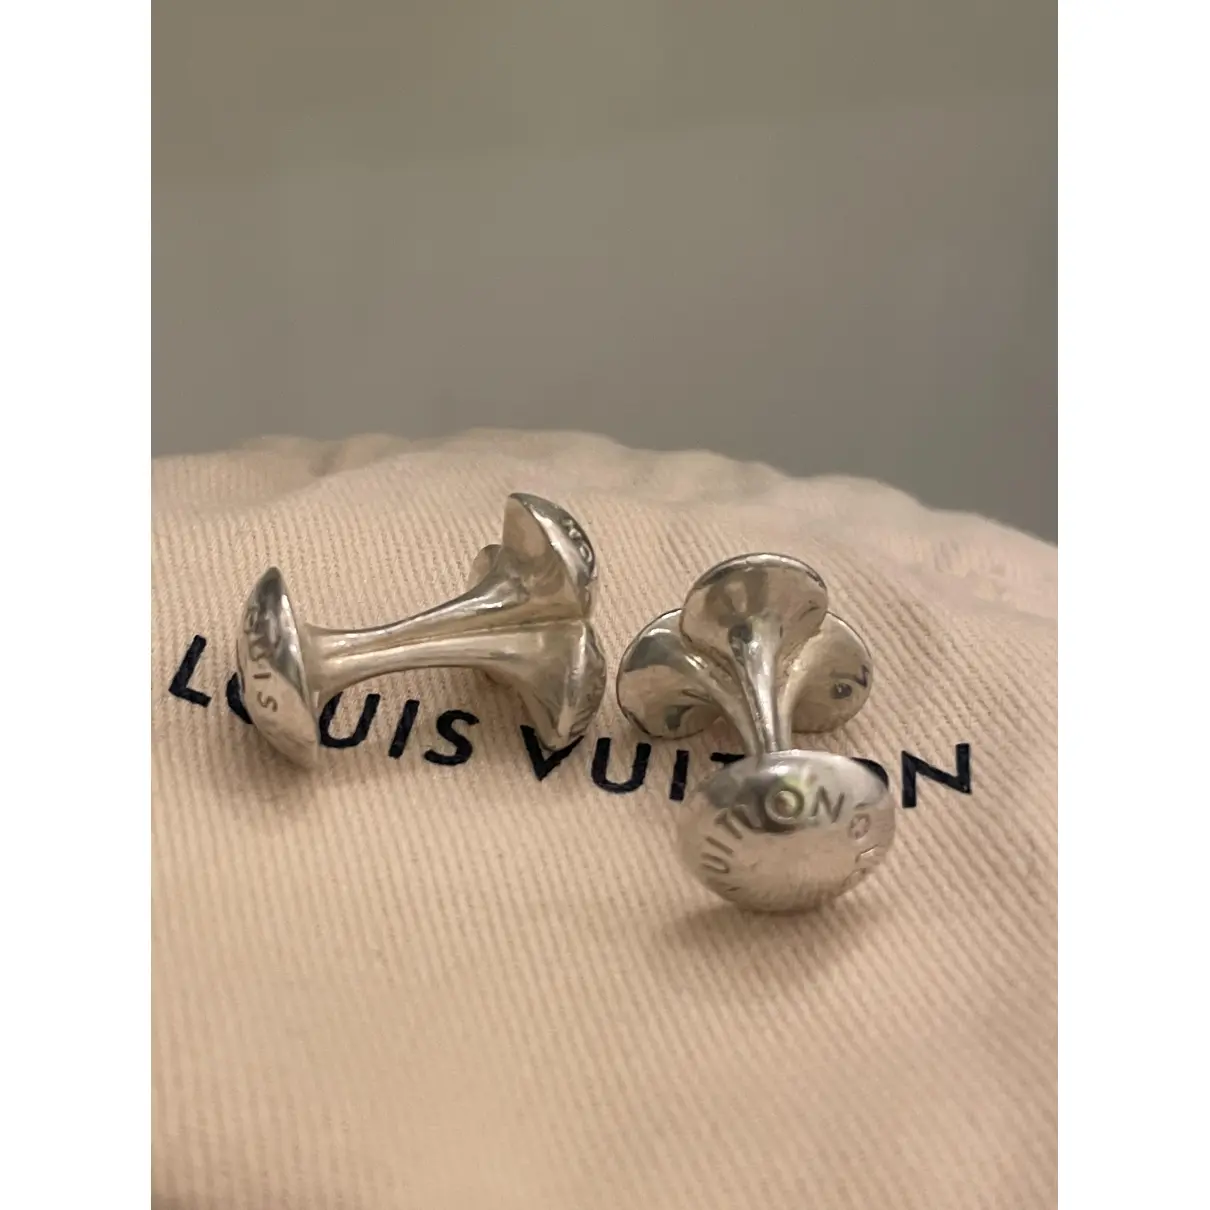 Buy Louis Vuitton Silver cufflinks online